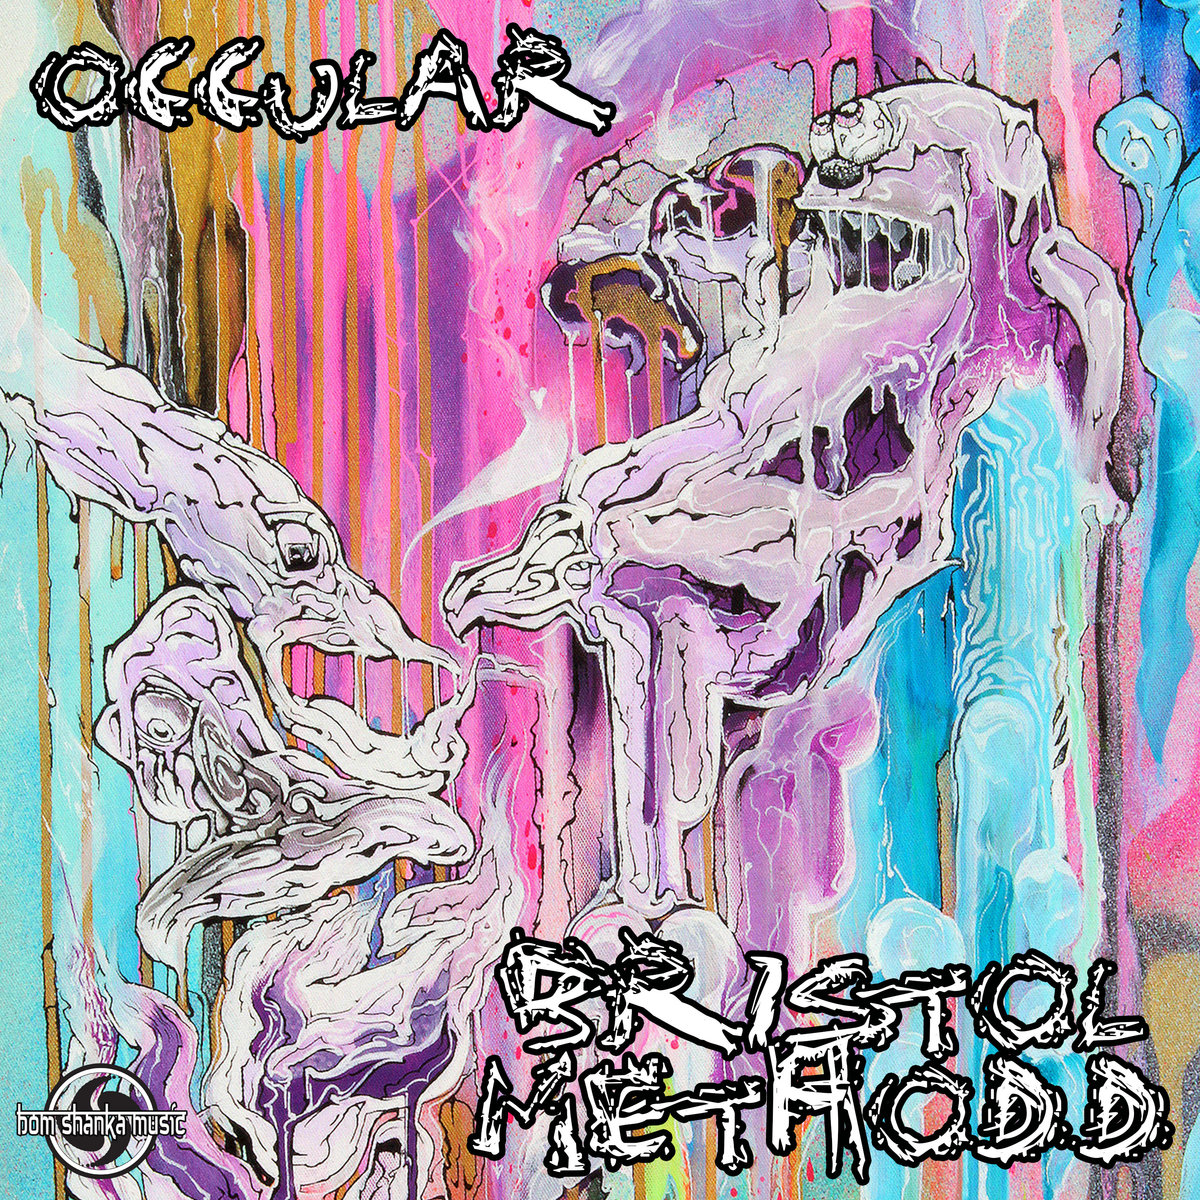 Occular - Bristol Methodd (Bom Shanka Music, London) Mastering